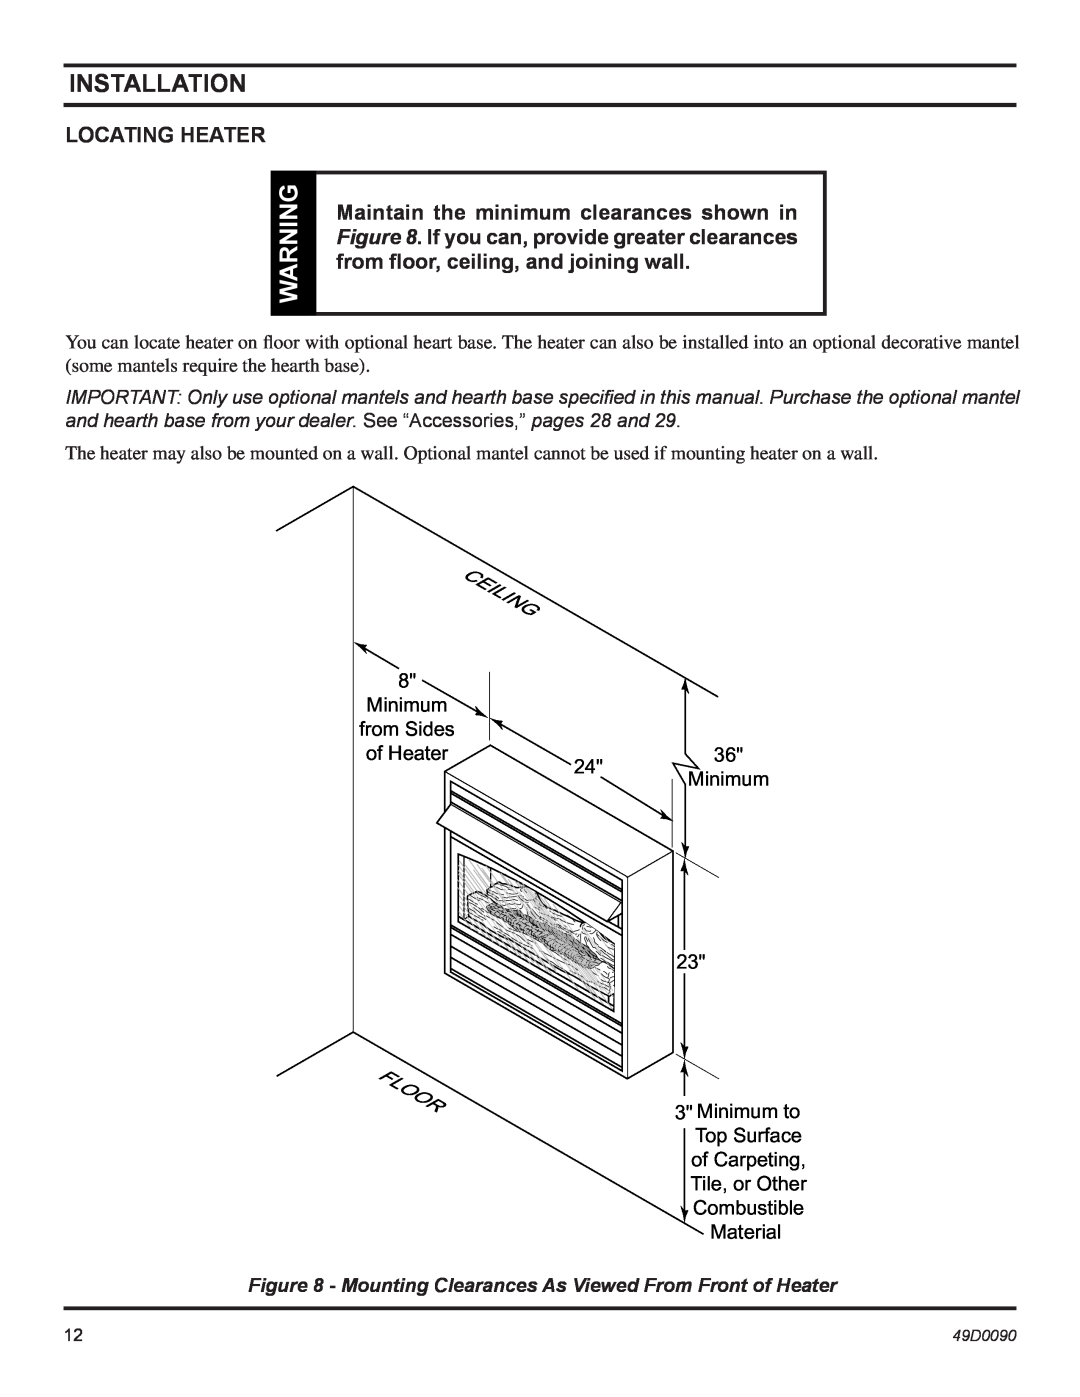 Monessen Hearth BTU/Hr installation manual Locating Heater, Installation 